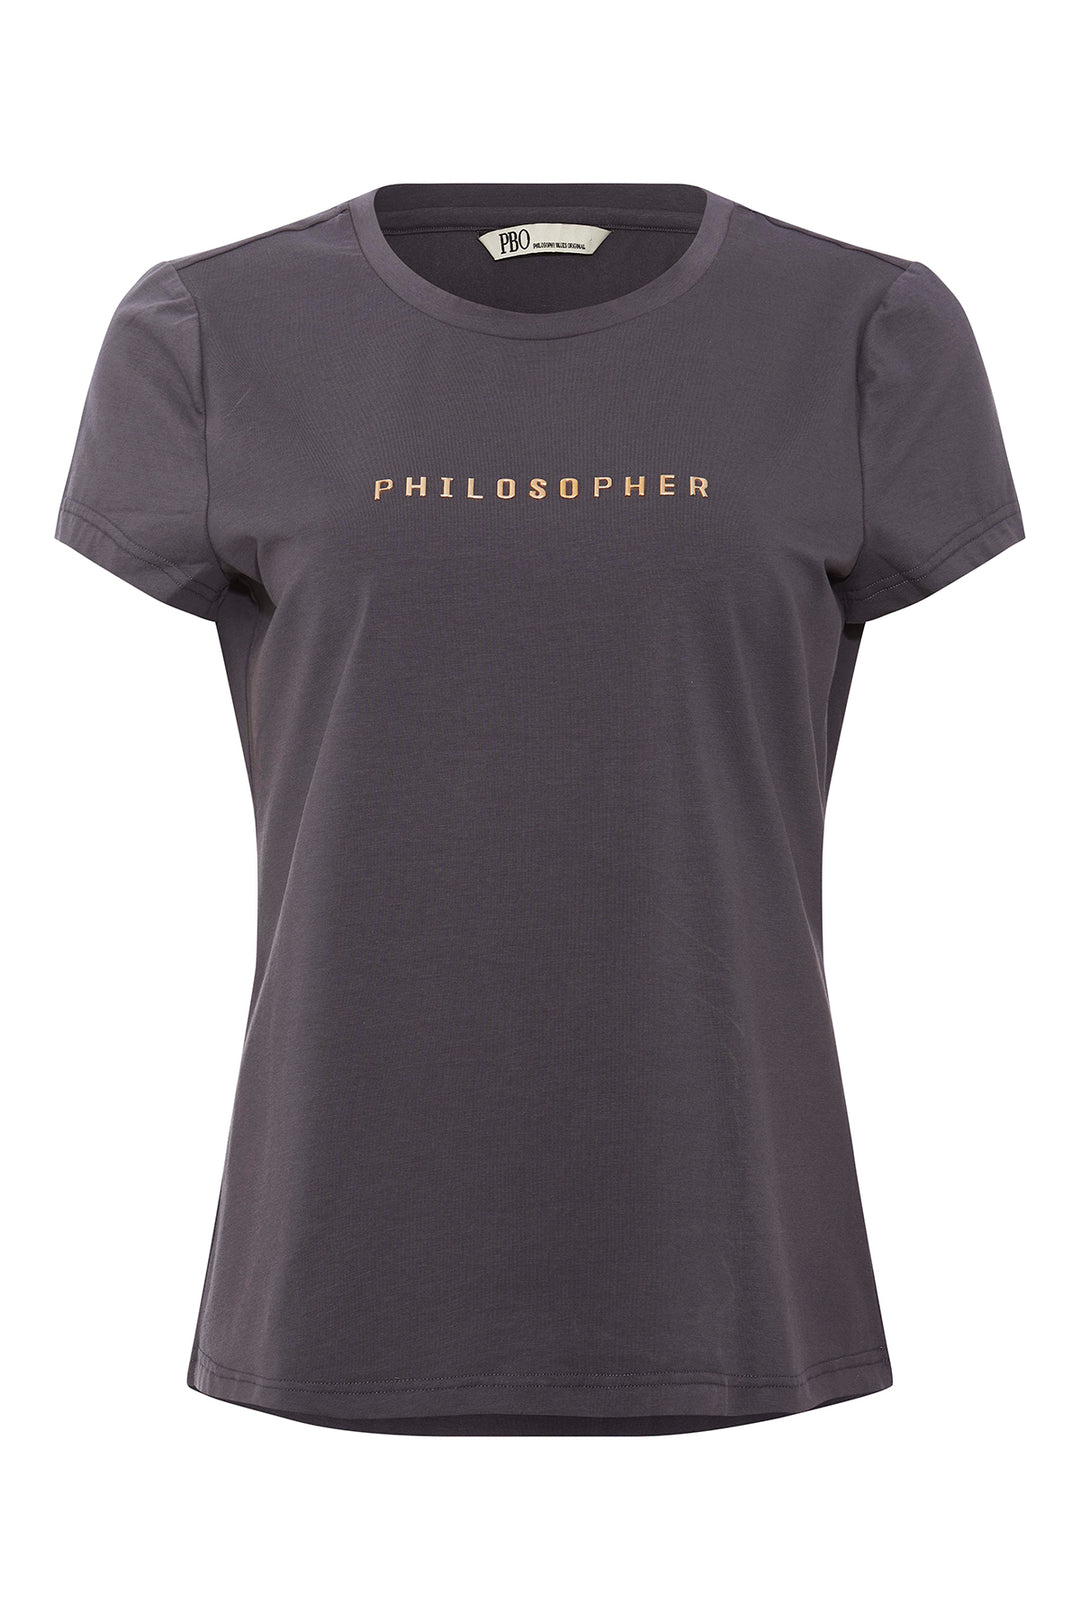 PBO Philosopher T-shirt T-SHIRTS 214 Ombre blue